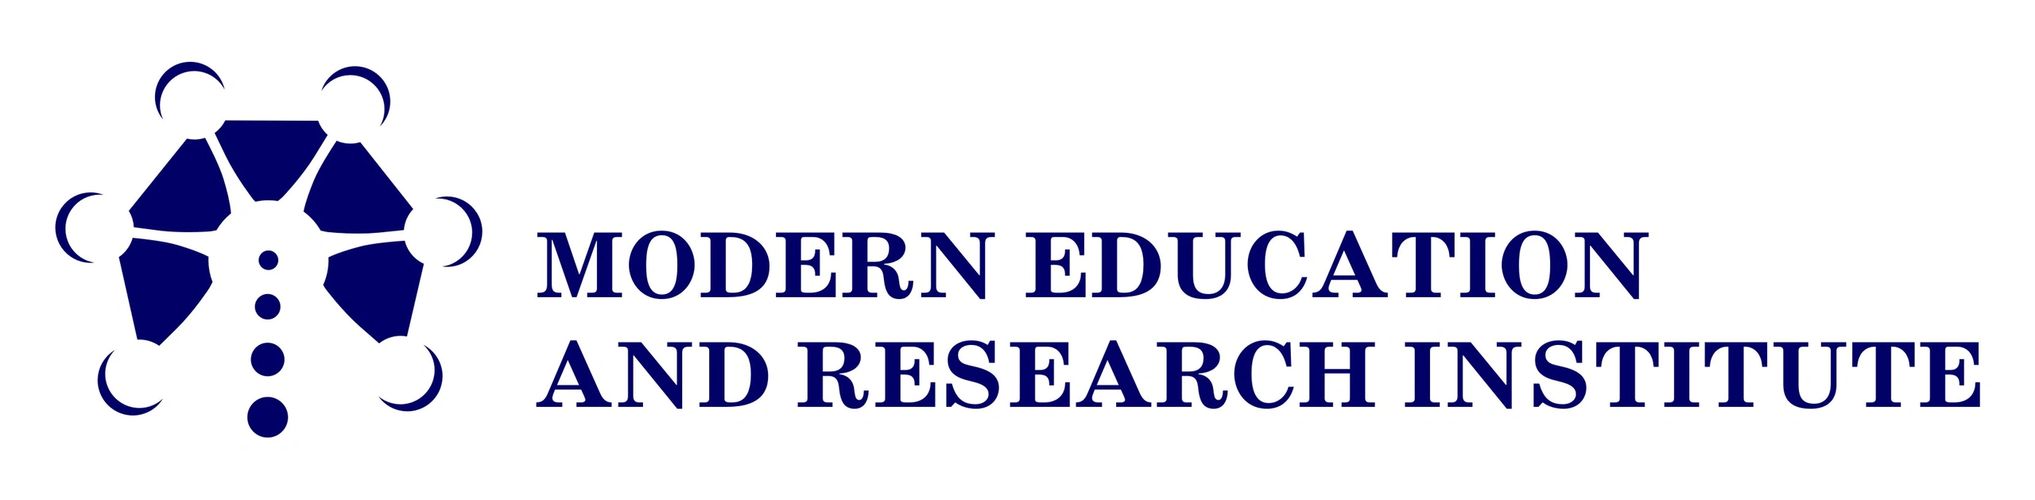 modern education & research institute